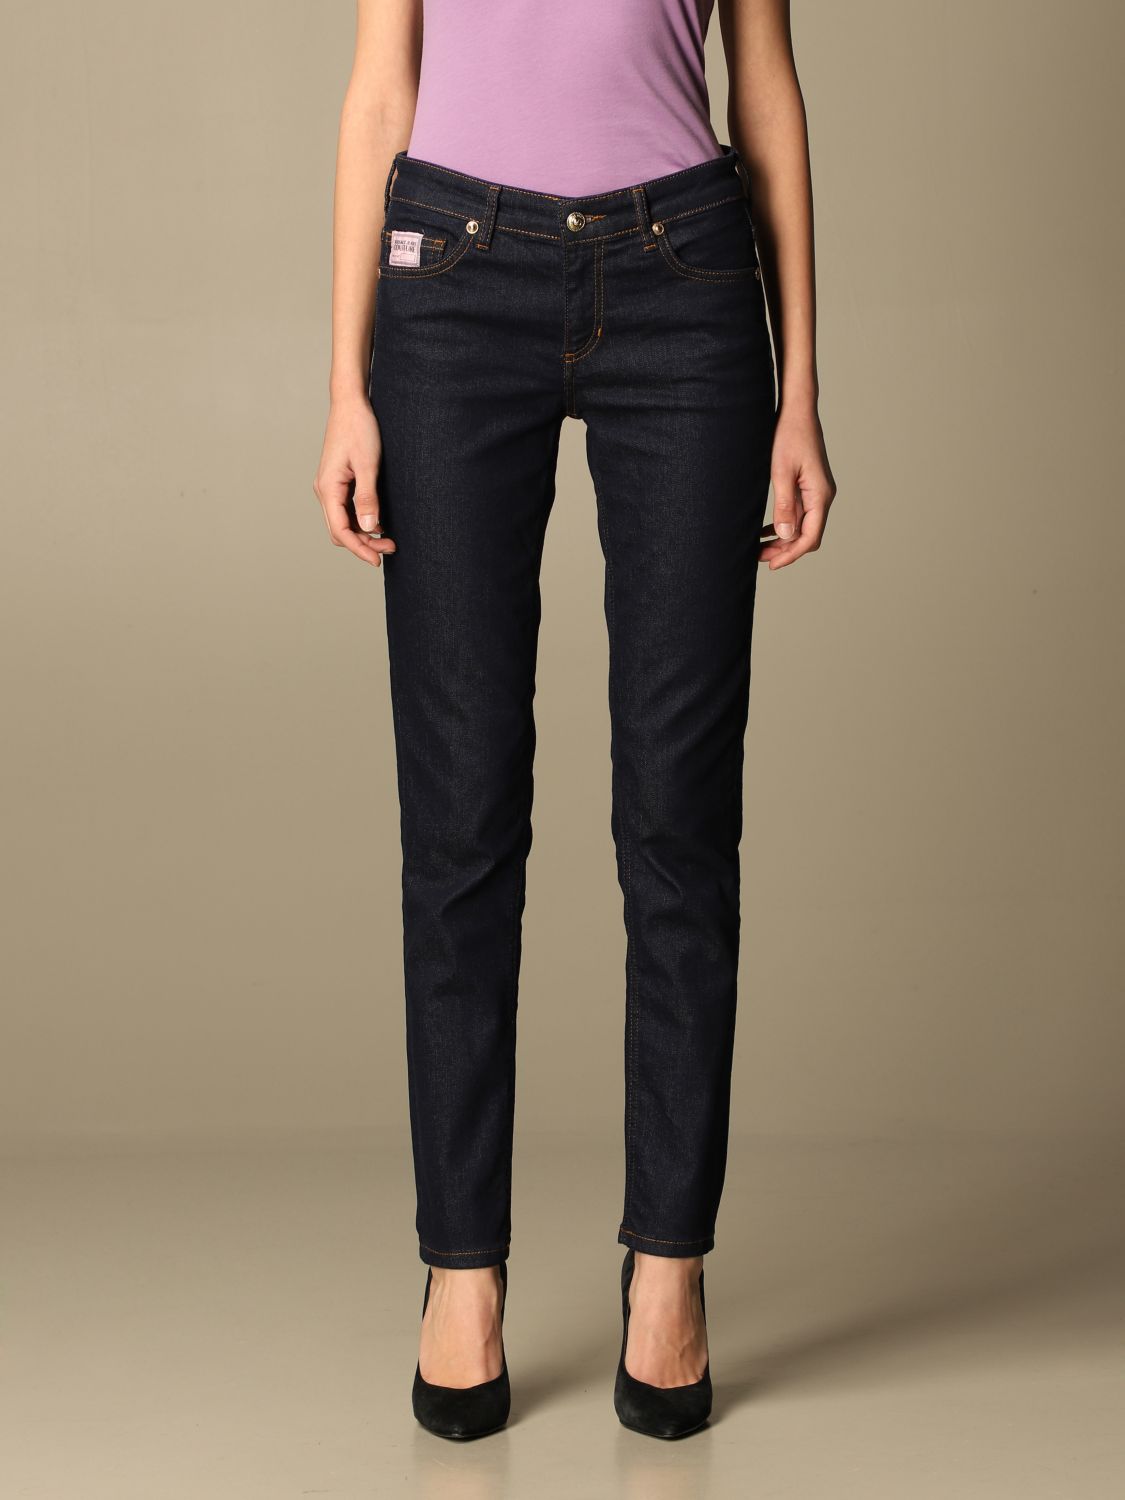 versace jeans fashion